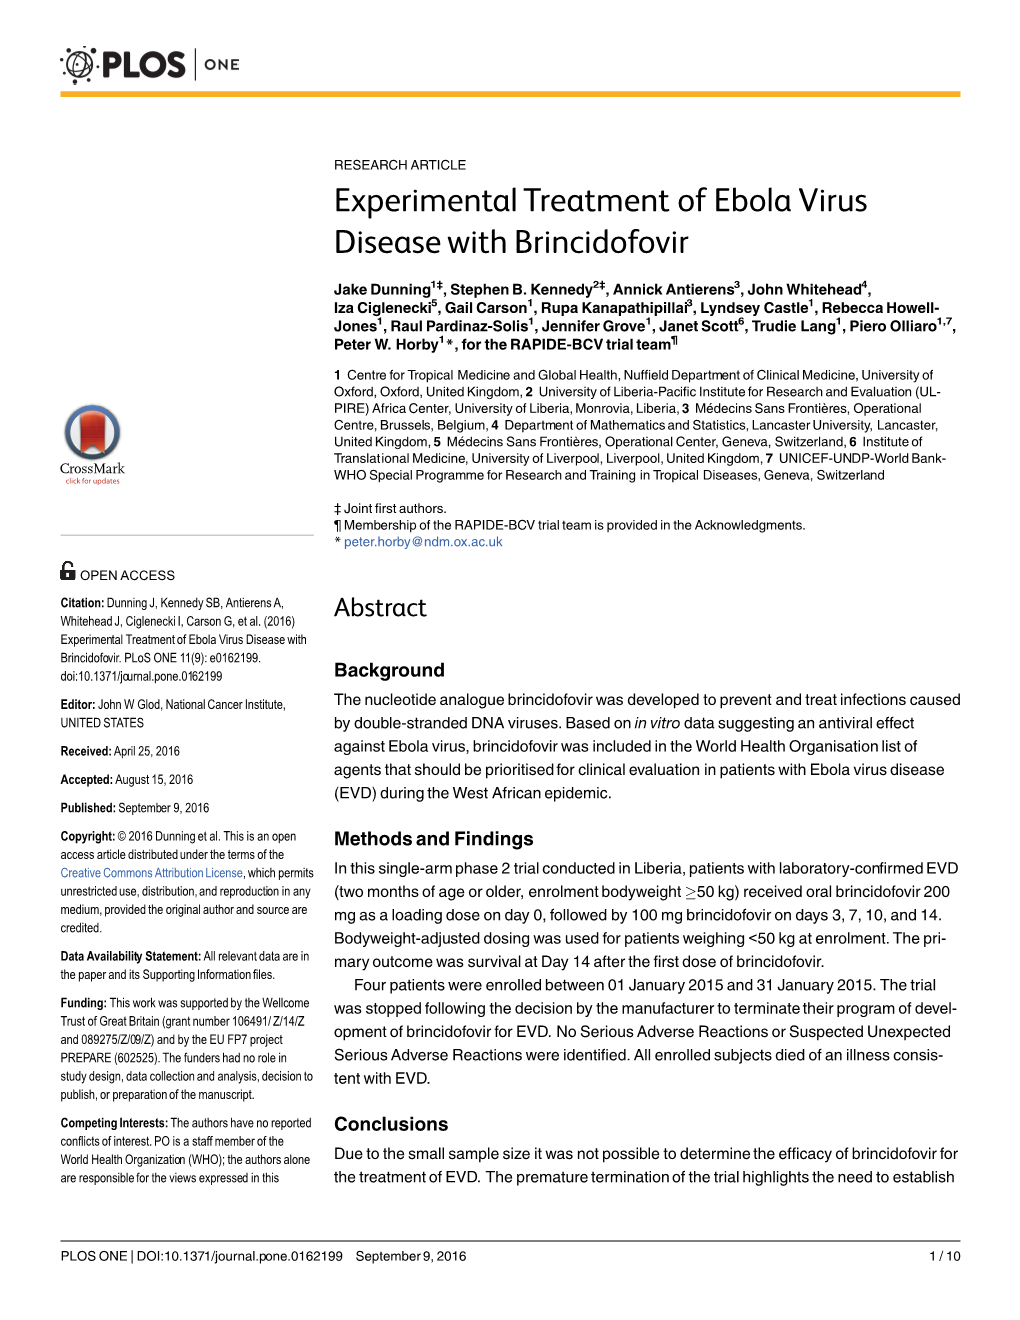 Experimental Treatment of Ebola Virus Disease with Brincidofovir